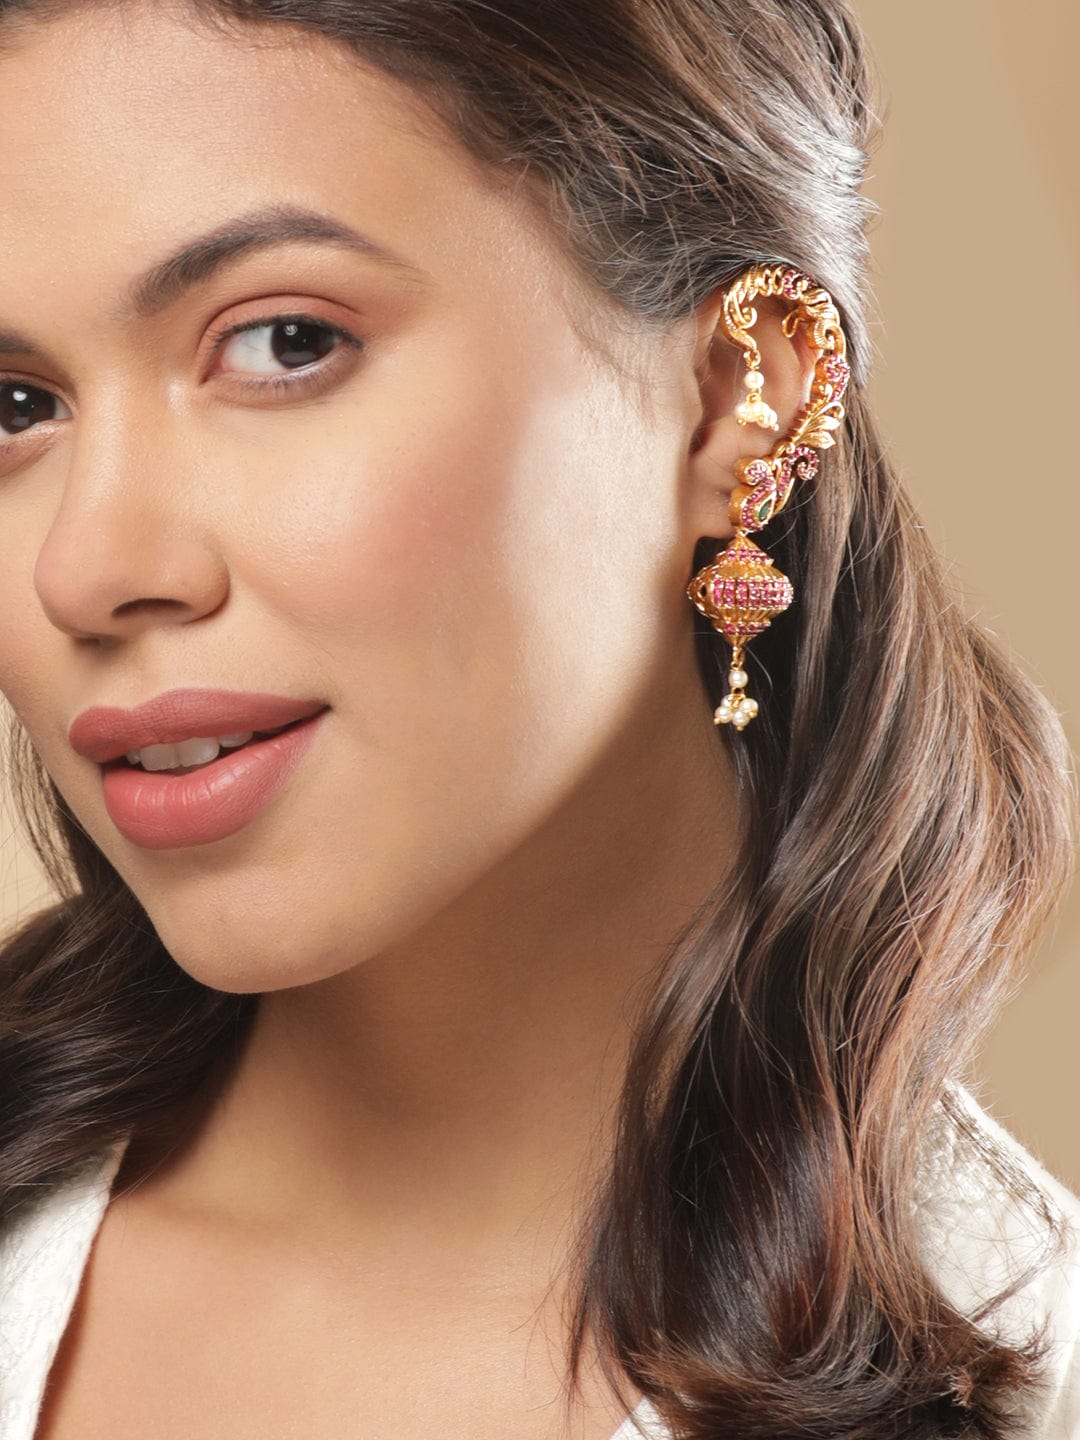 Rubans Gold-Toned Contemporary Jhumkas Earrings Earrings